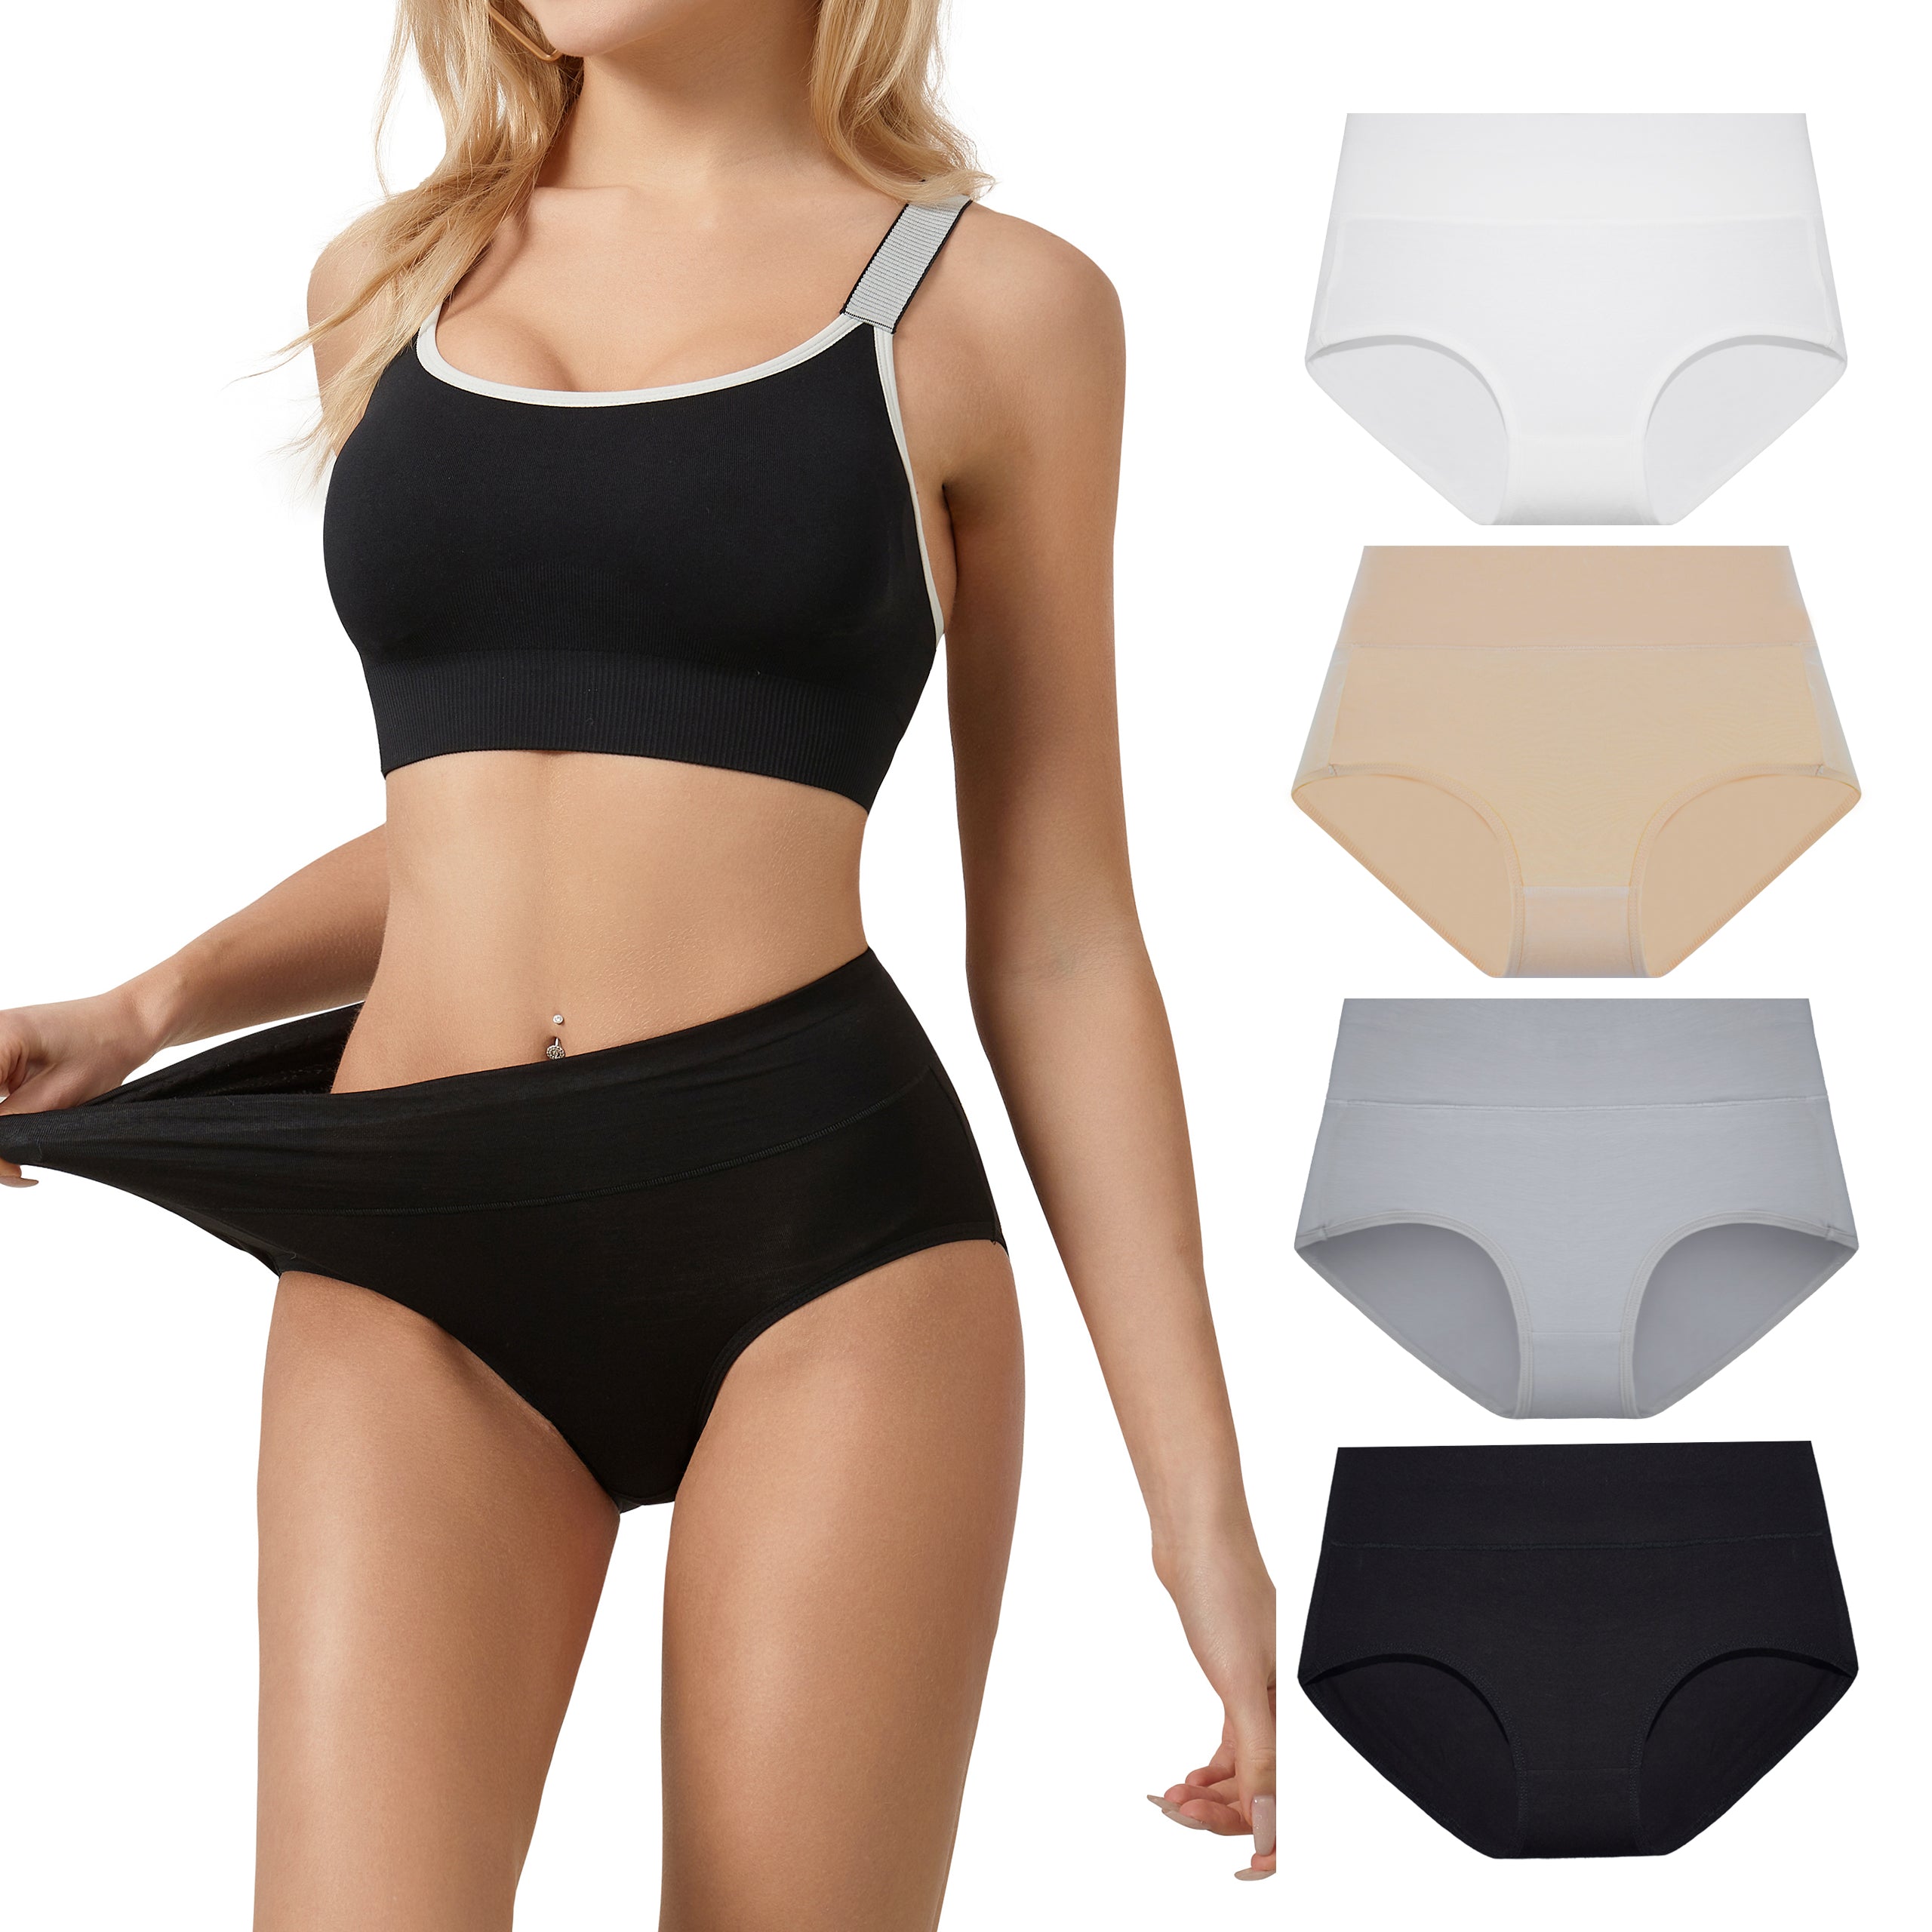 Cotton Whisper Womens Cotton 4-8 Packs Thongs Underwear (X-Small